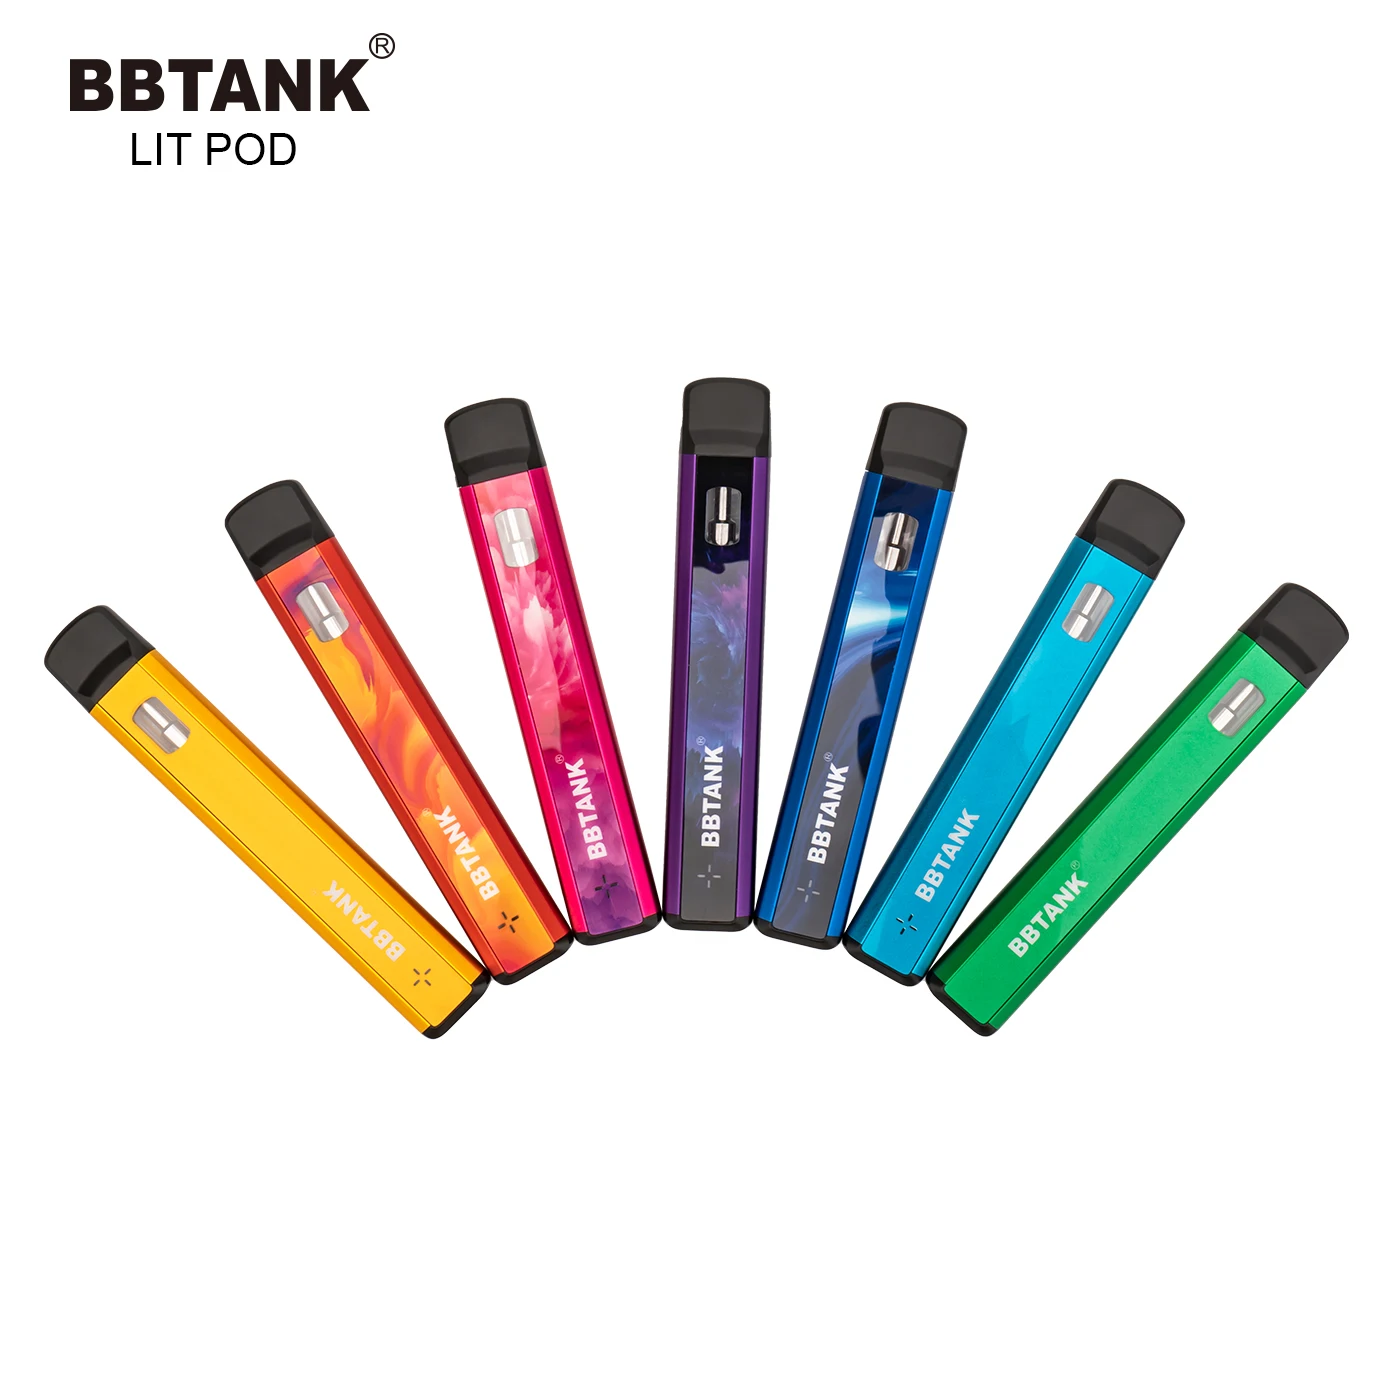 

BBtank 2021 Best Selling Lit Pod 350mAh Rechargeable Vaper with Custom logo 1ml Oil Vape Pen cake Vaporizer, Customized colors